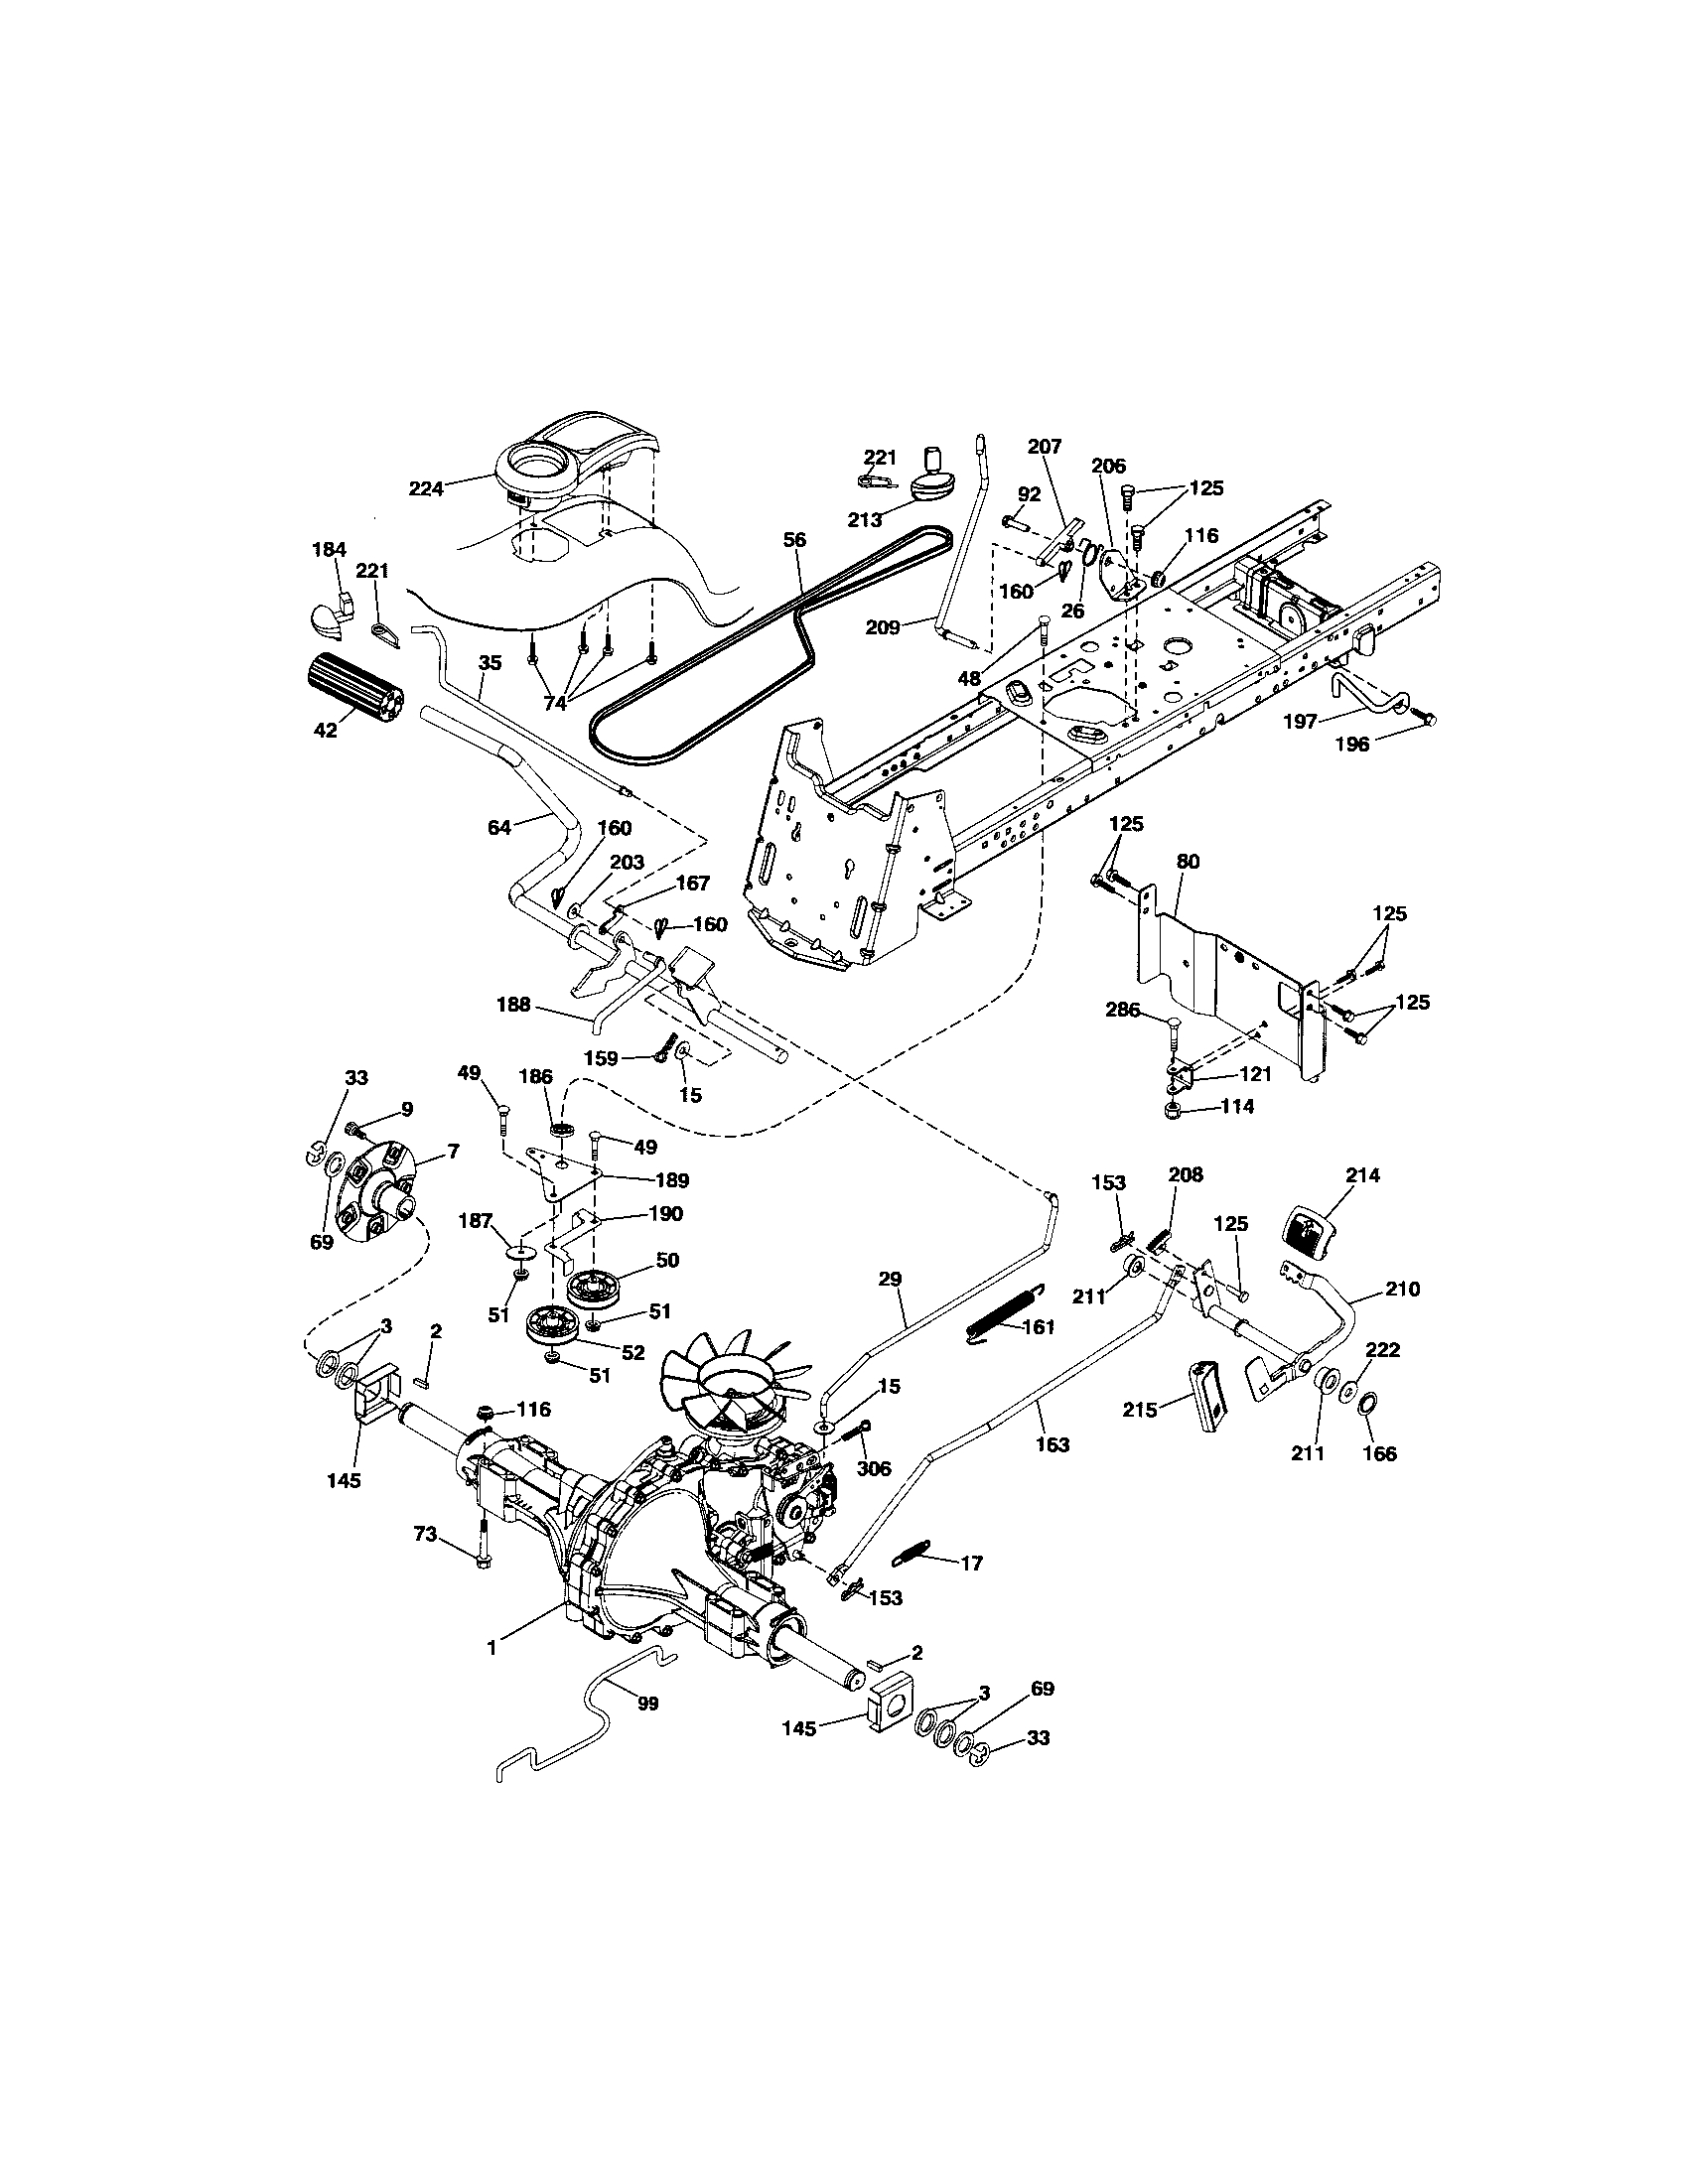 Craftsman Hydrostatic Transmission Diagram 917289470 Craftsman 26 Hp 54 Inch Automatic Garden Tractor Manual